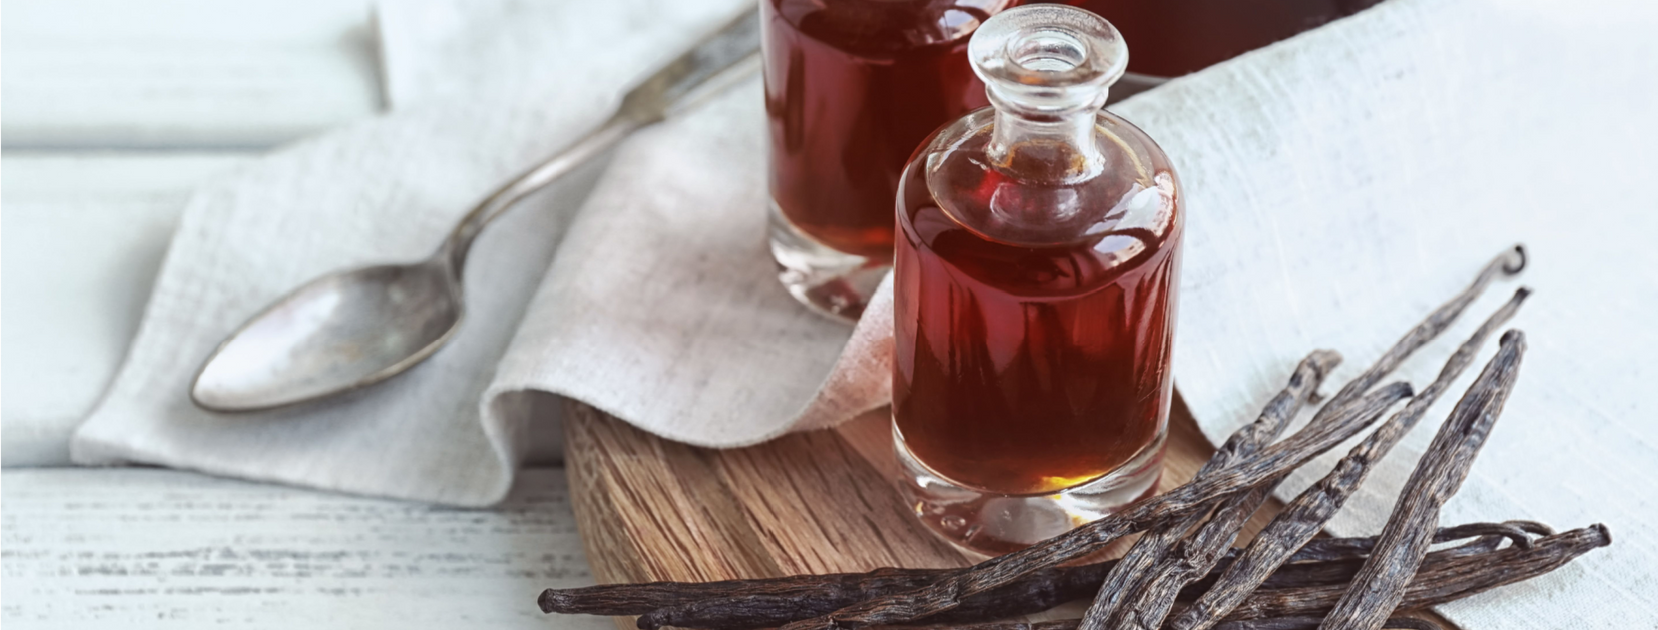 Uses of Vanilla Essential Oil and Precautions – Essential Oils Company